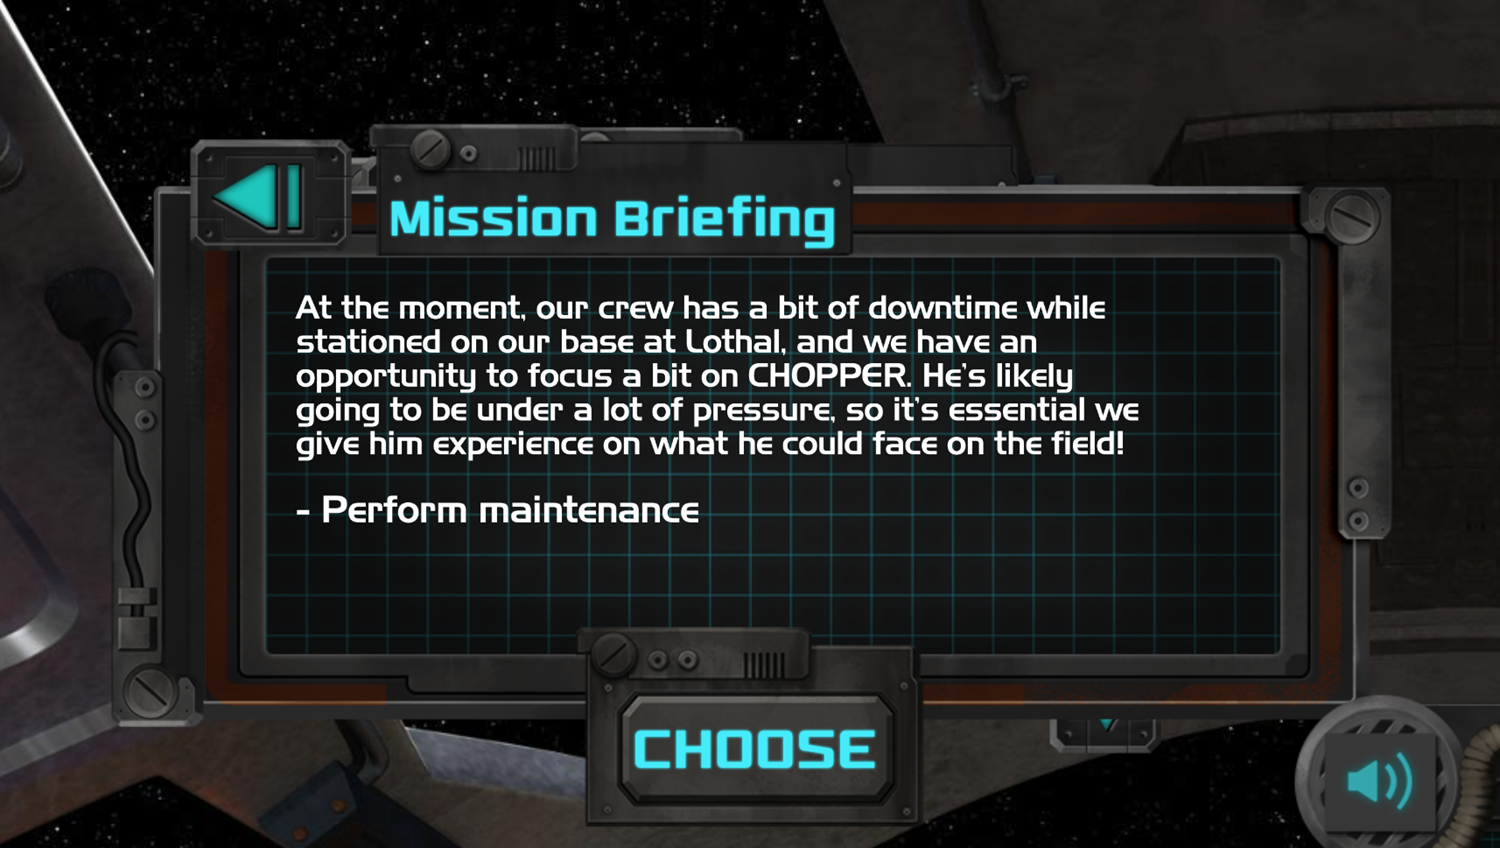 Star Wars Rebels Chopper Chase Game Mission Briefing Screenshot.